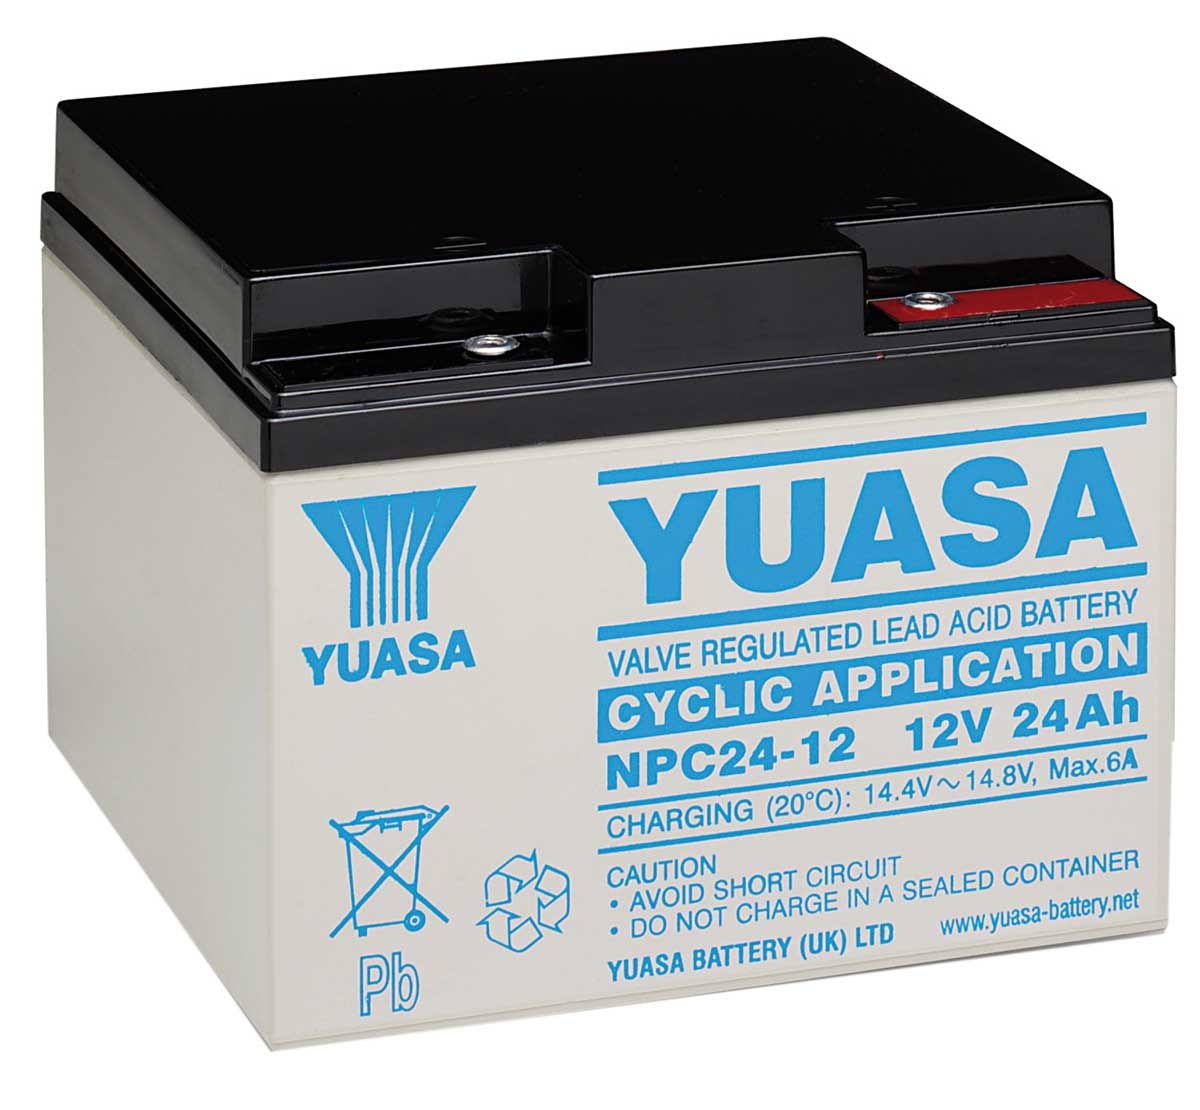 NPC24-12 Yuasa 12V 24Ah Cyclic Battery